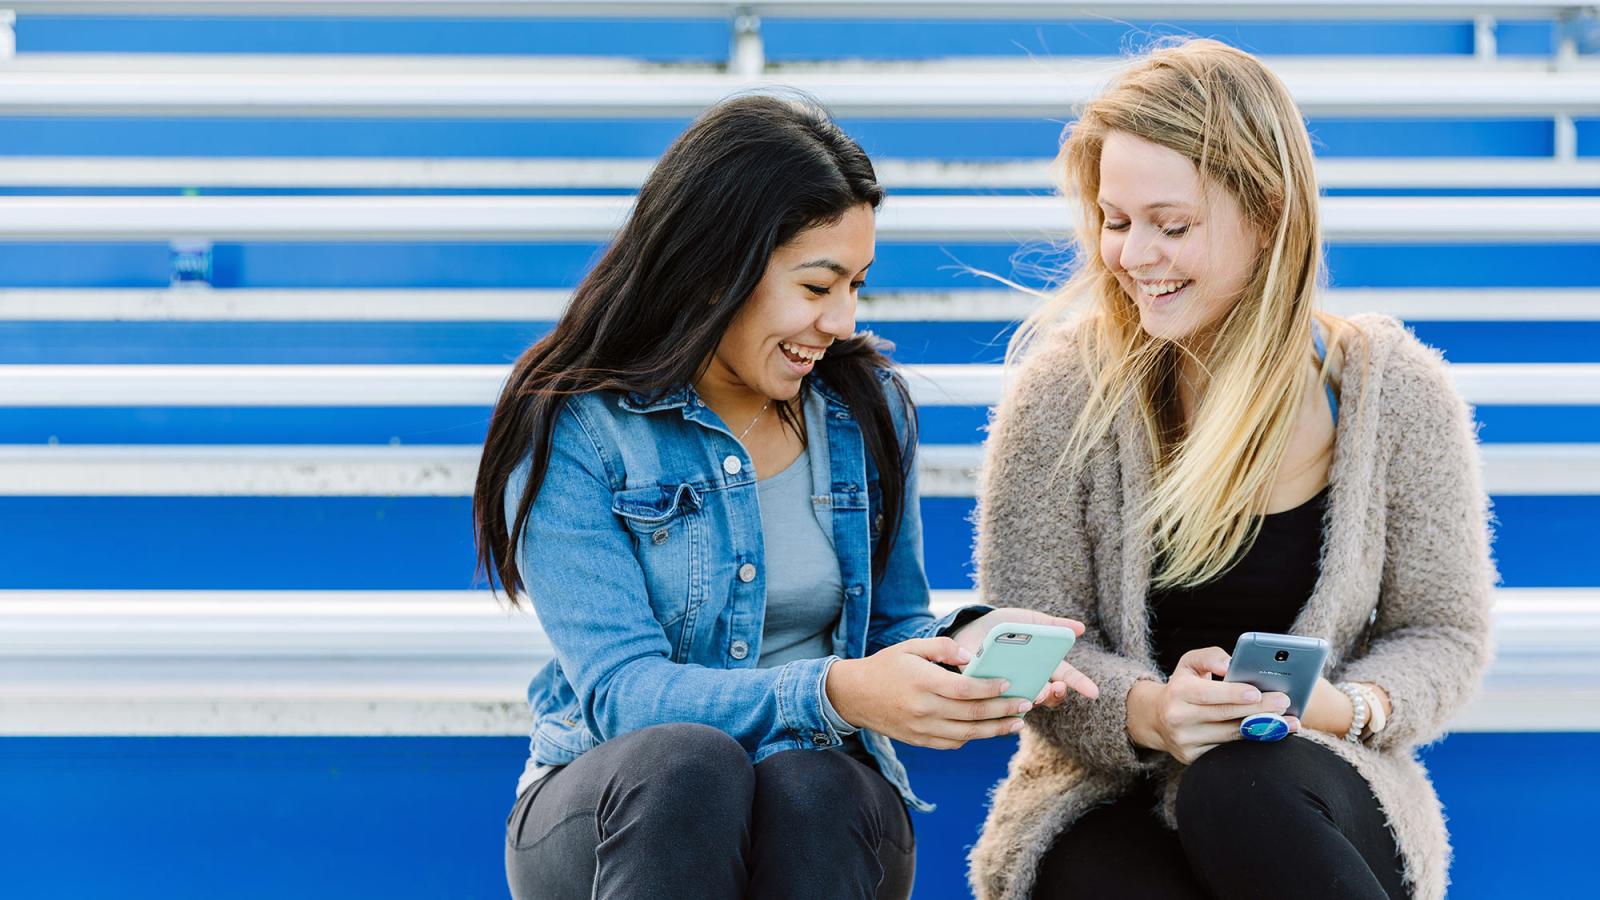 Two pace university students sitting on the football stadium bleachers